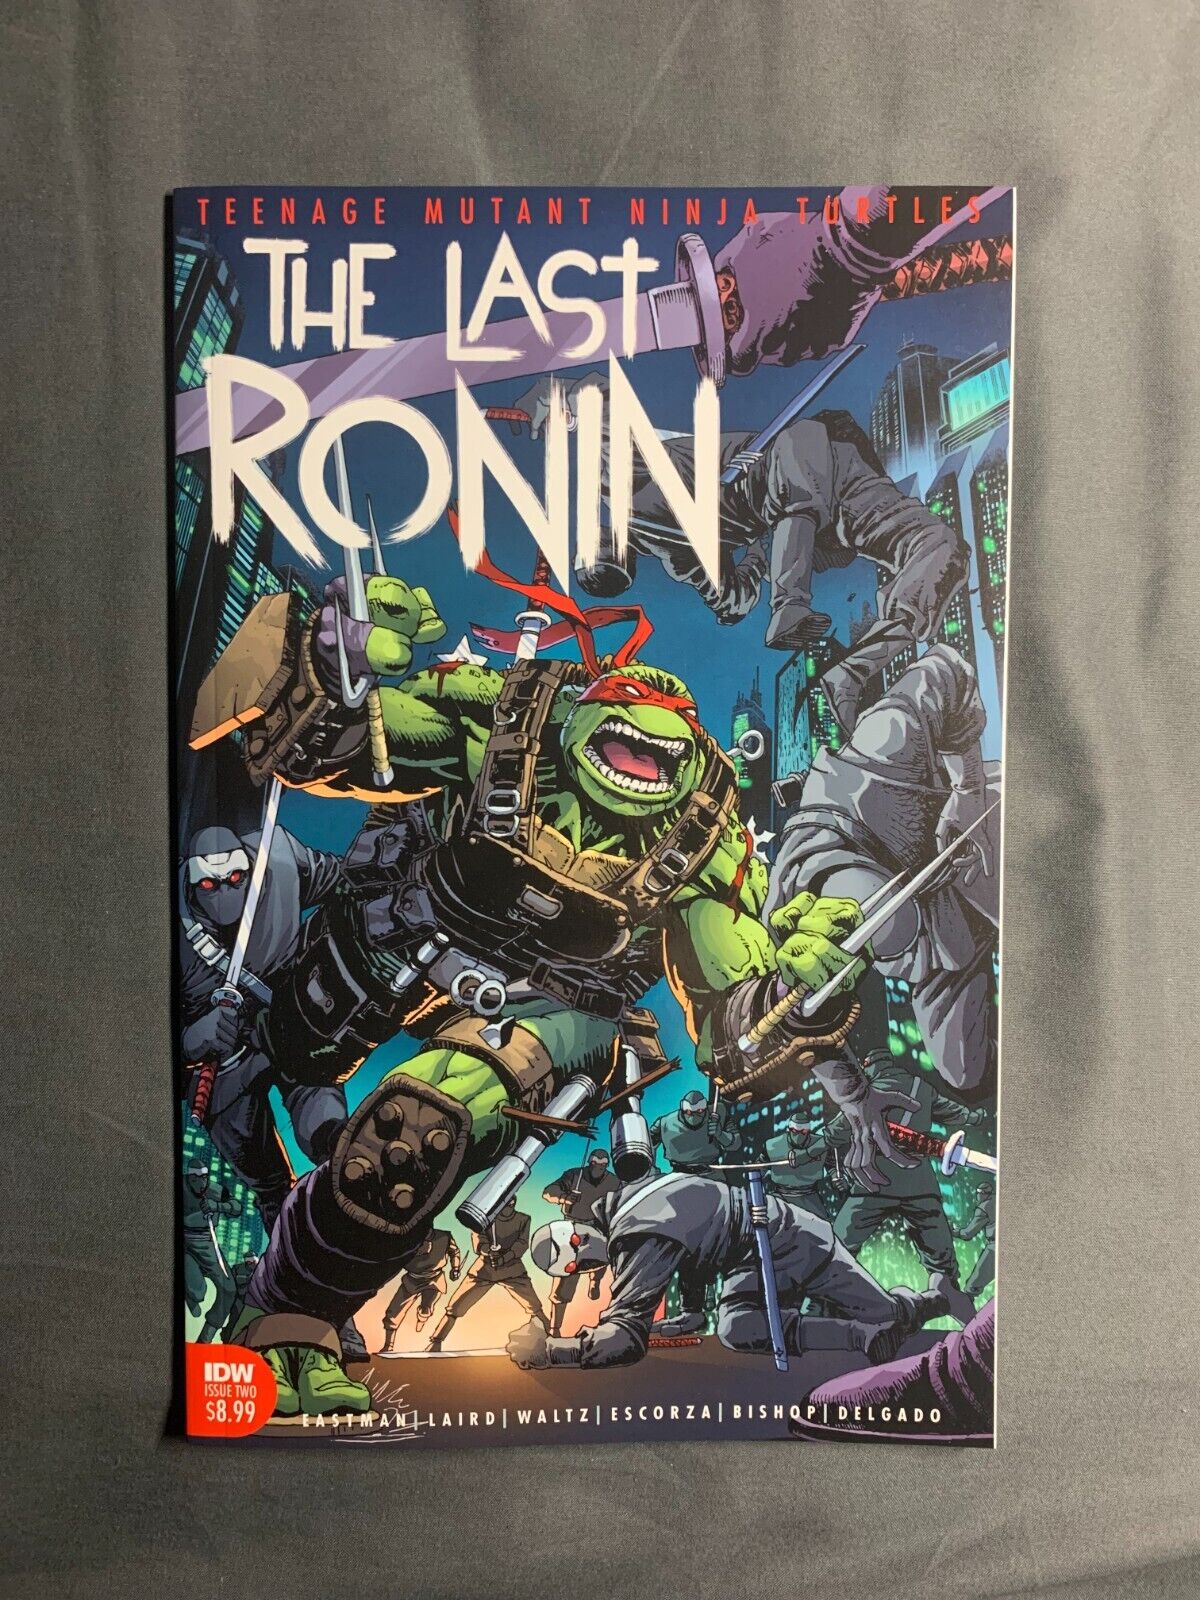 Teenage Mutant Ninja Turtles TMNT THE LAST RONIN #2 Cover A First Print IDW - NM